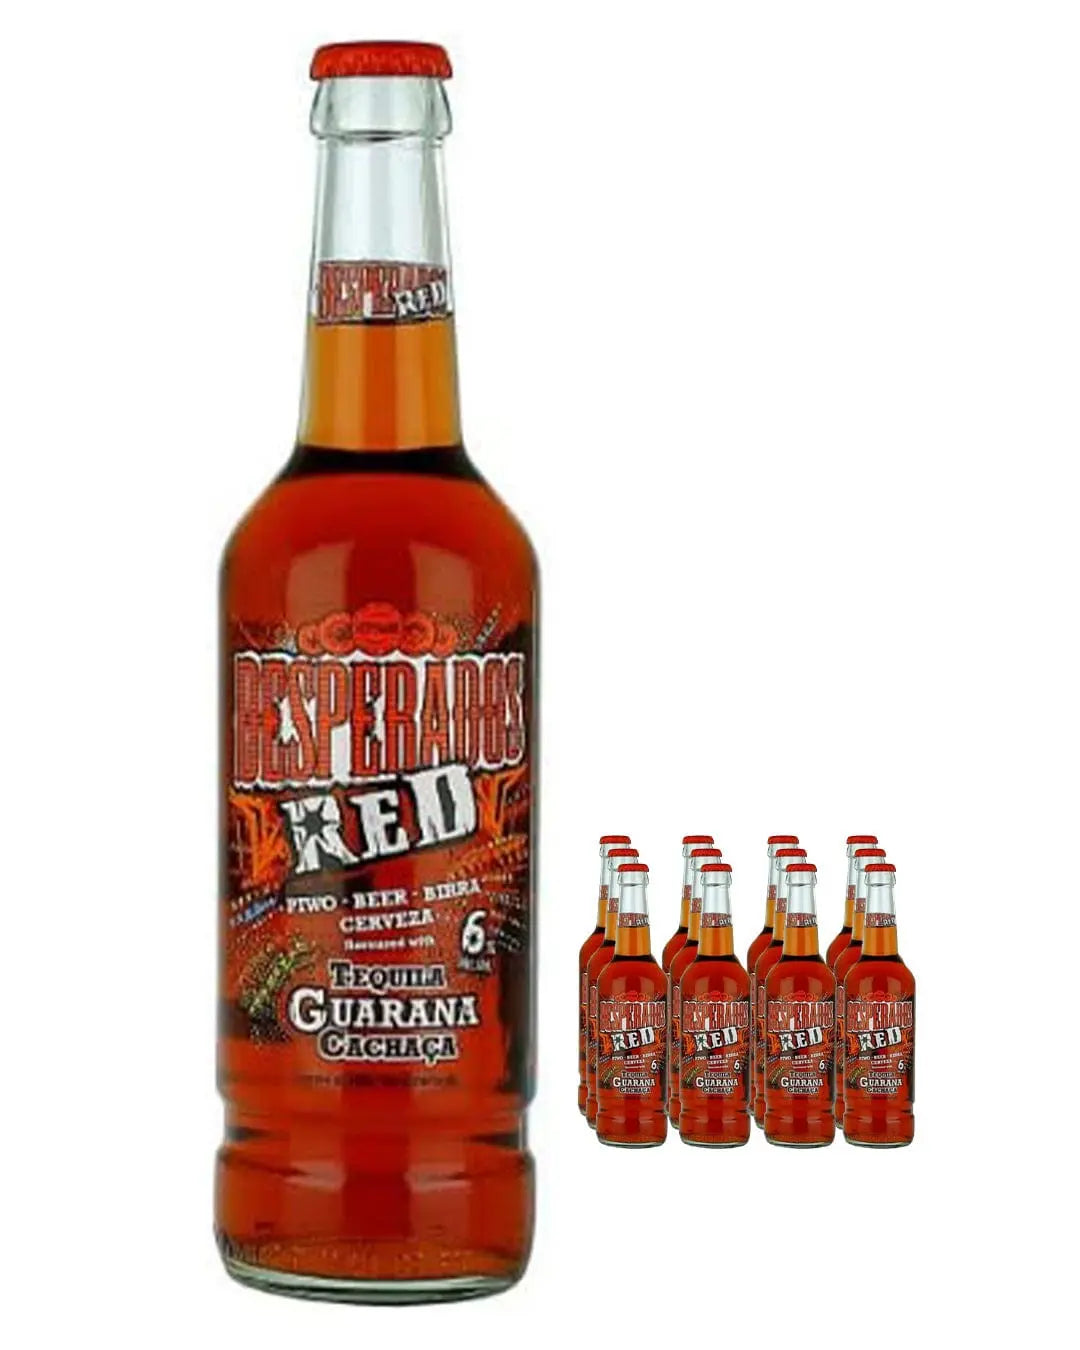 Desperados Red Premium Tequila & Guarana Lager Beer Bottle Multipack, 12 x 400 ml Beer